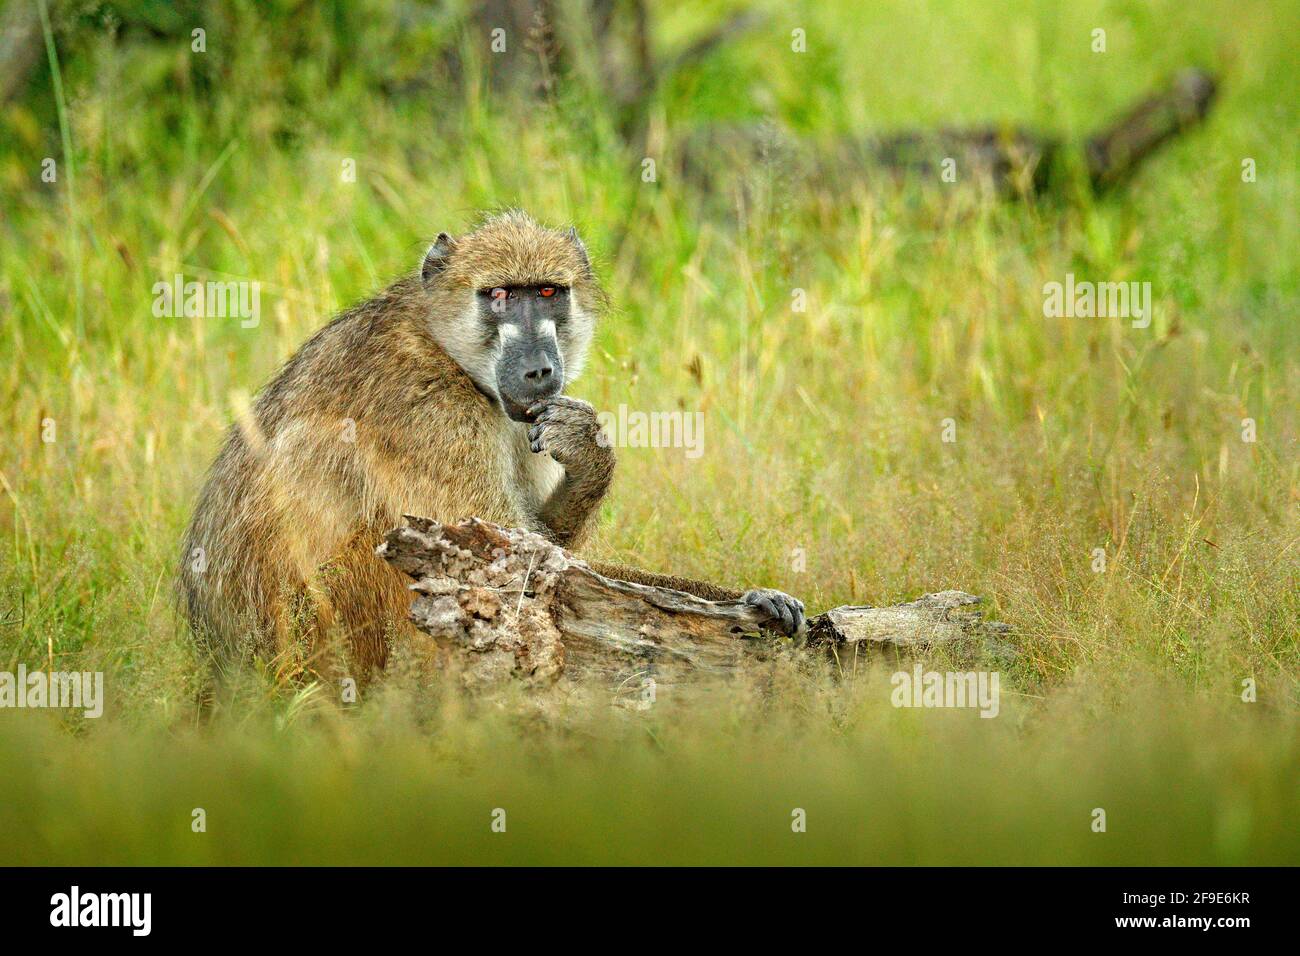 Chacma baboon, Papio ursinus, monkey from Moremi, Okavango delta, Botswana. Wild mammal in the nature habitat. Monkey feeding fruits in the gren veget Stock Photo